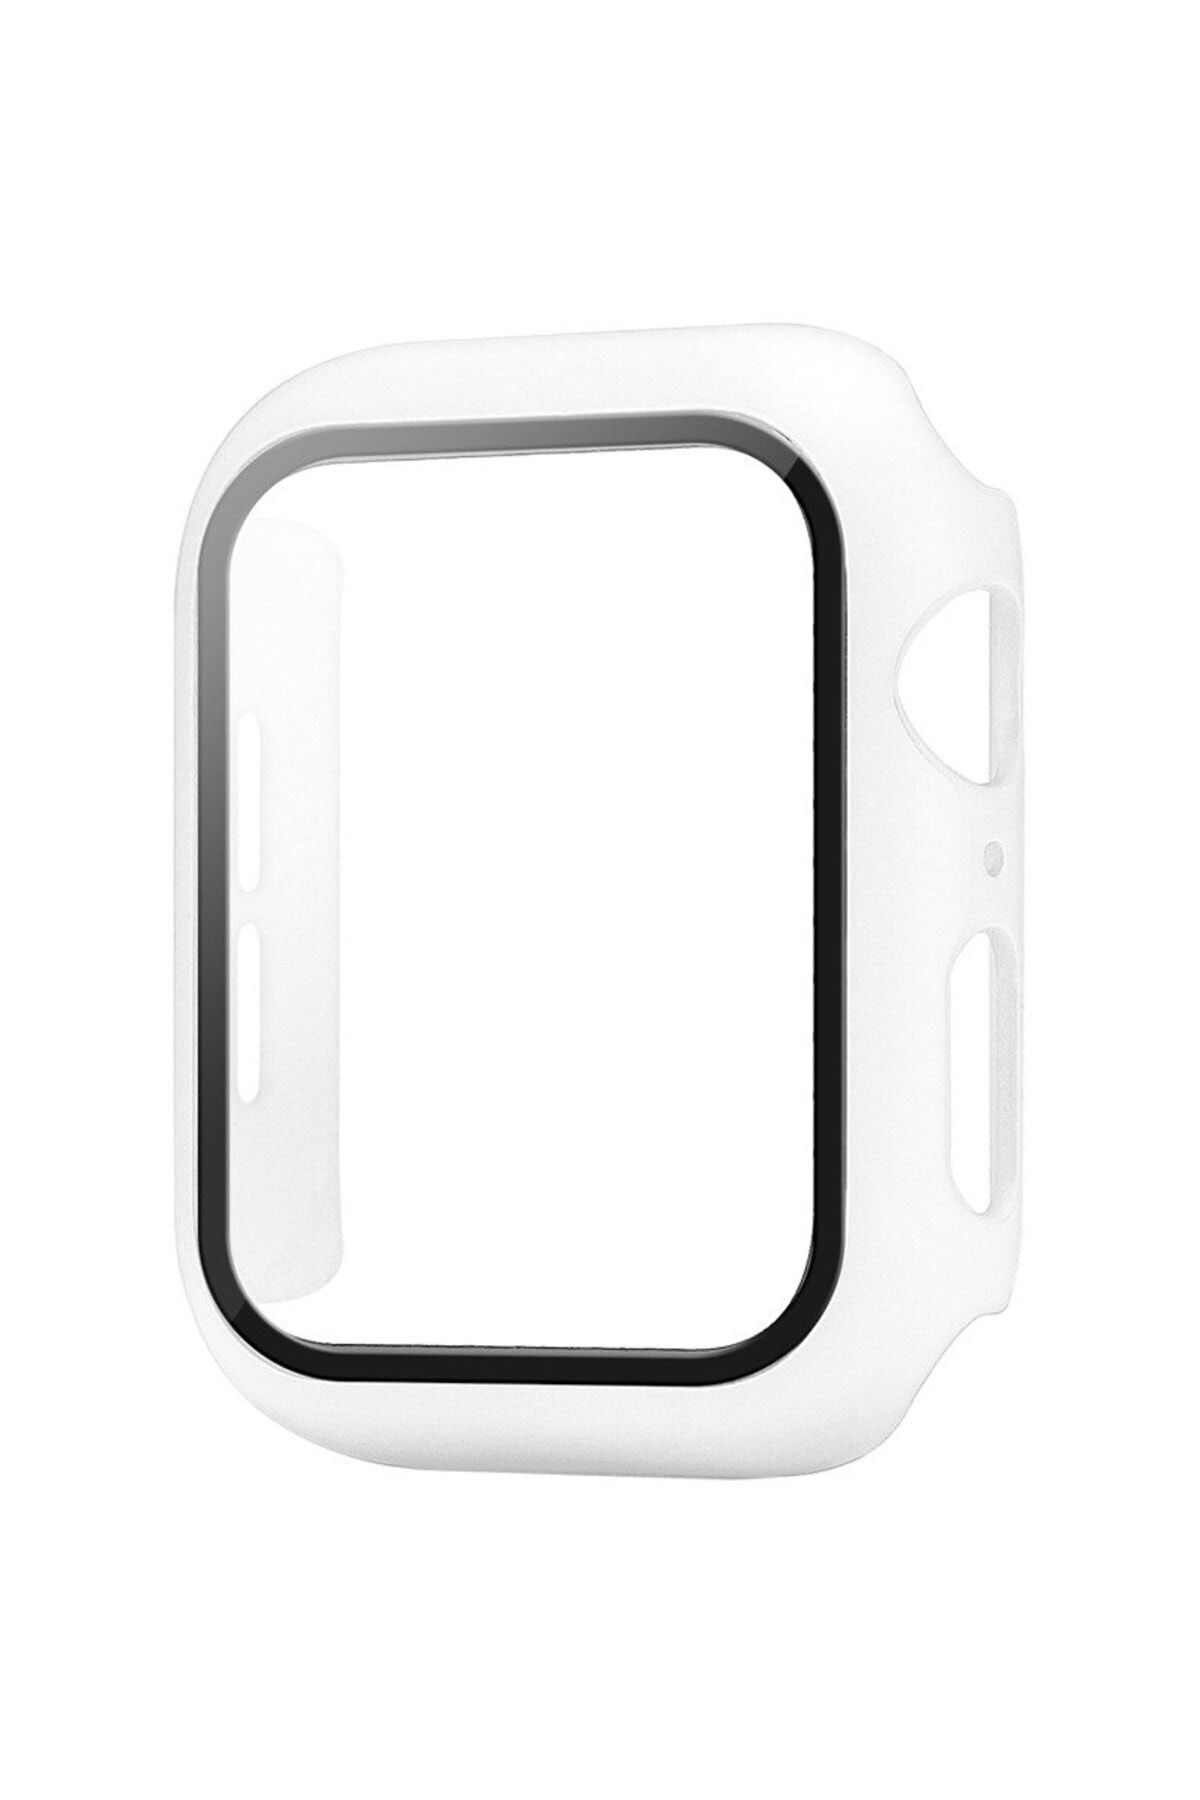 QUSE Apple Watch Seri 3-2 42mm Uyumlu Ekran ve Kasa Koruyucu